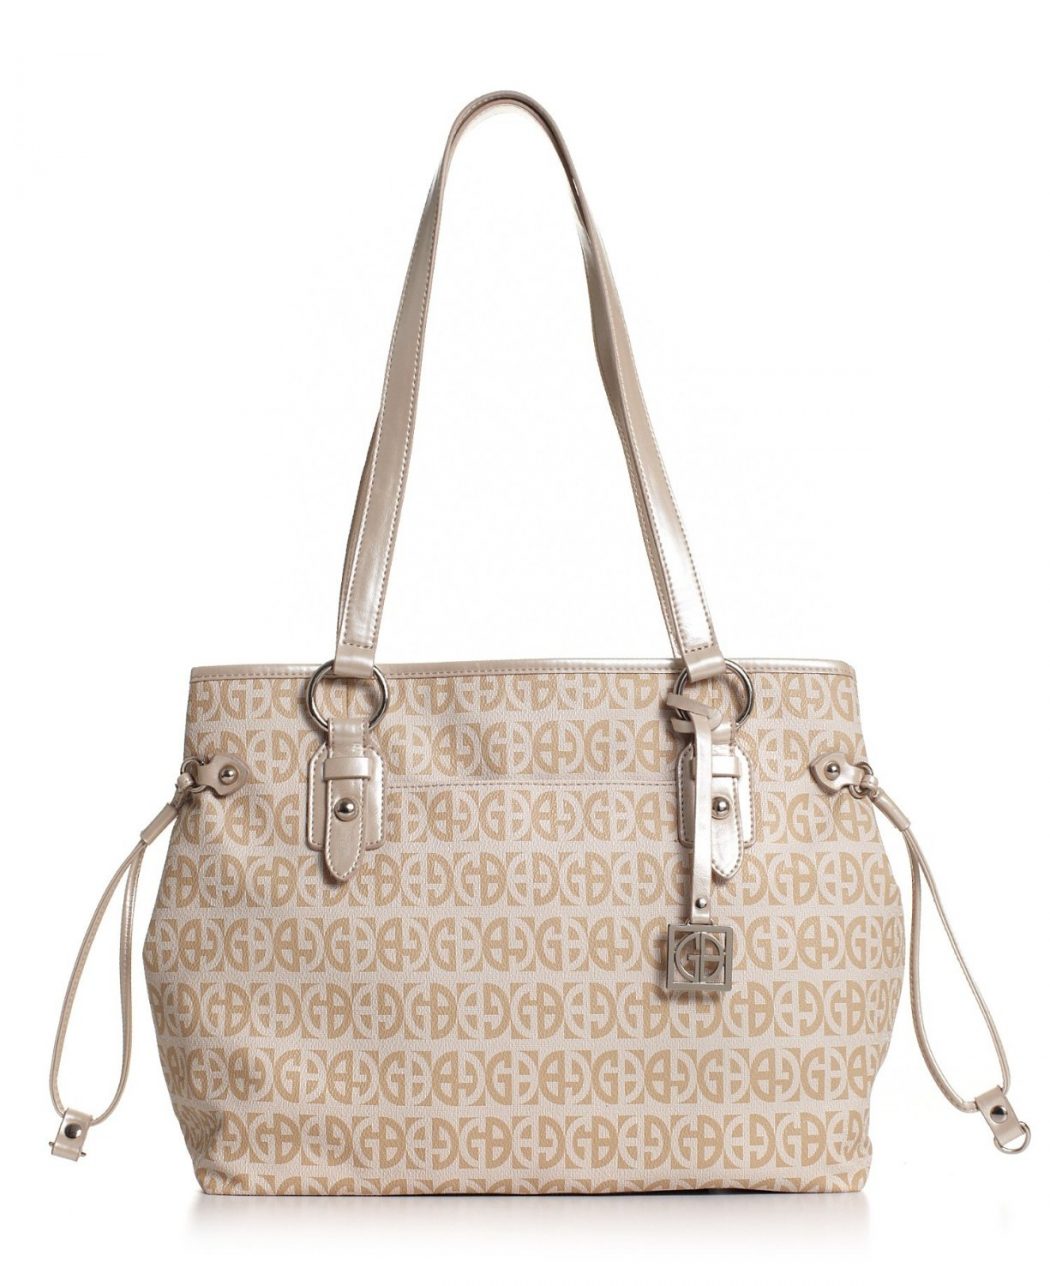 Giani-Bernini-Handbags-2013-Fashionable-Handbags-Trend-3 The Next 7 Women's Bag Fashion Trends of This Year!